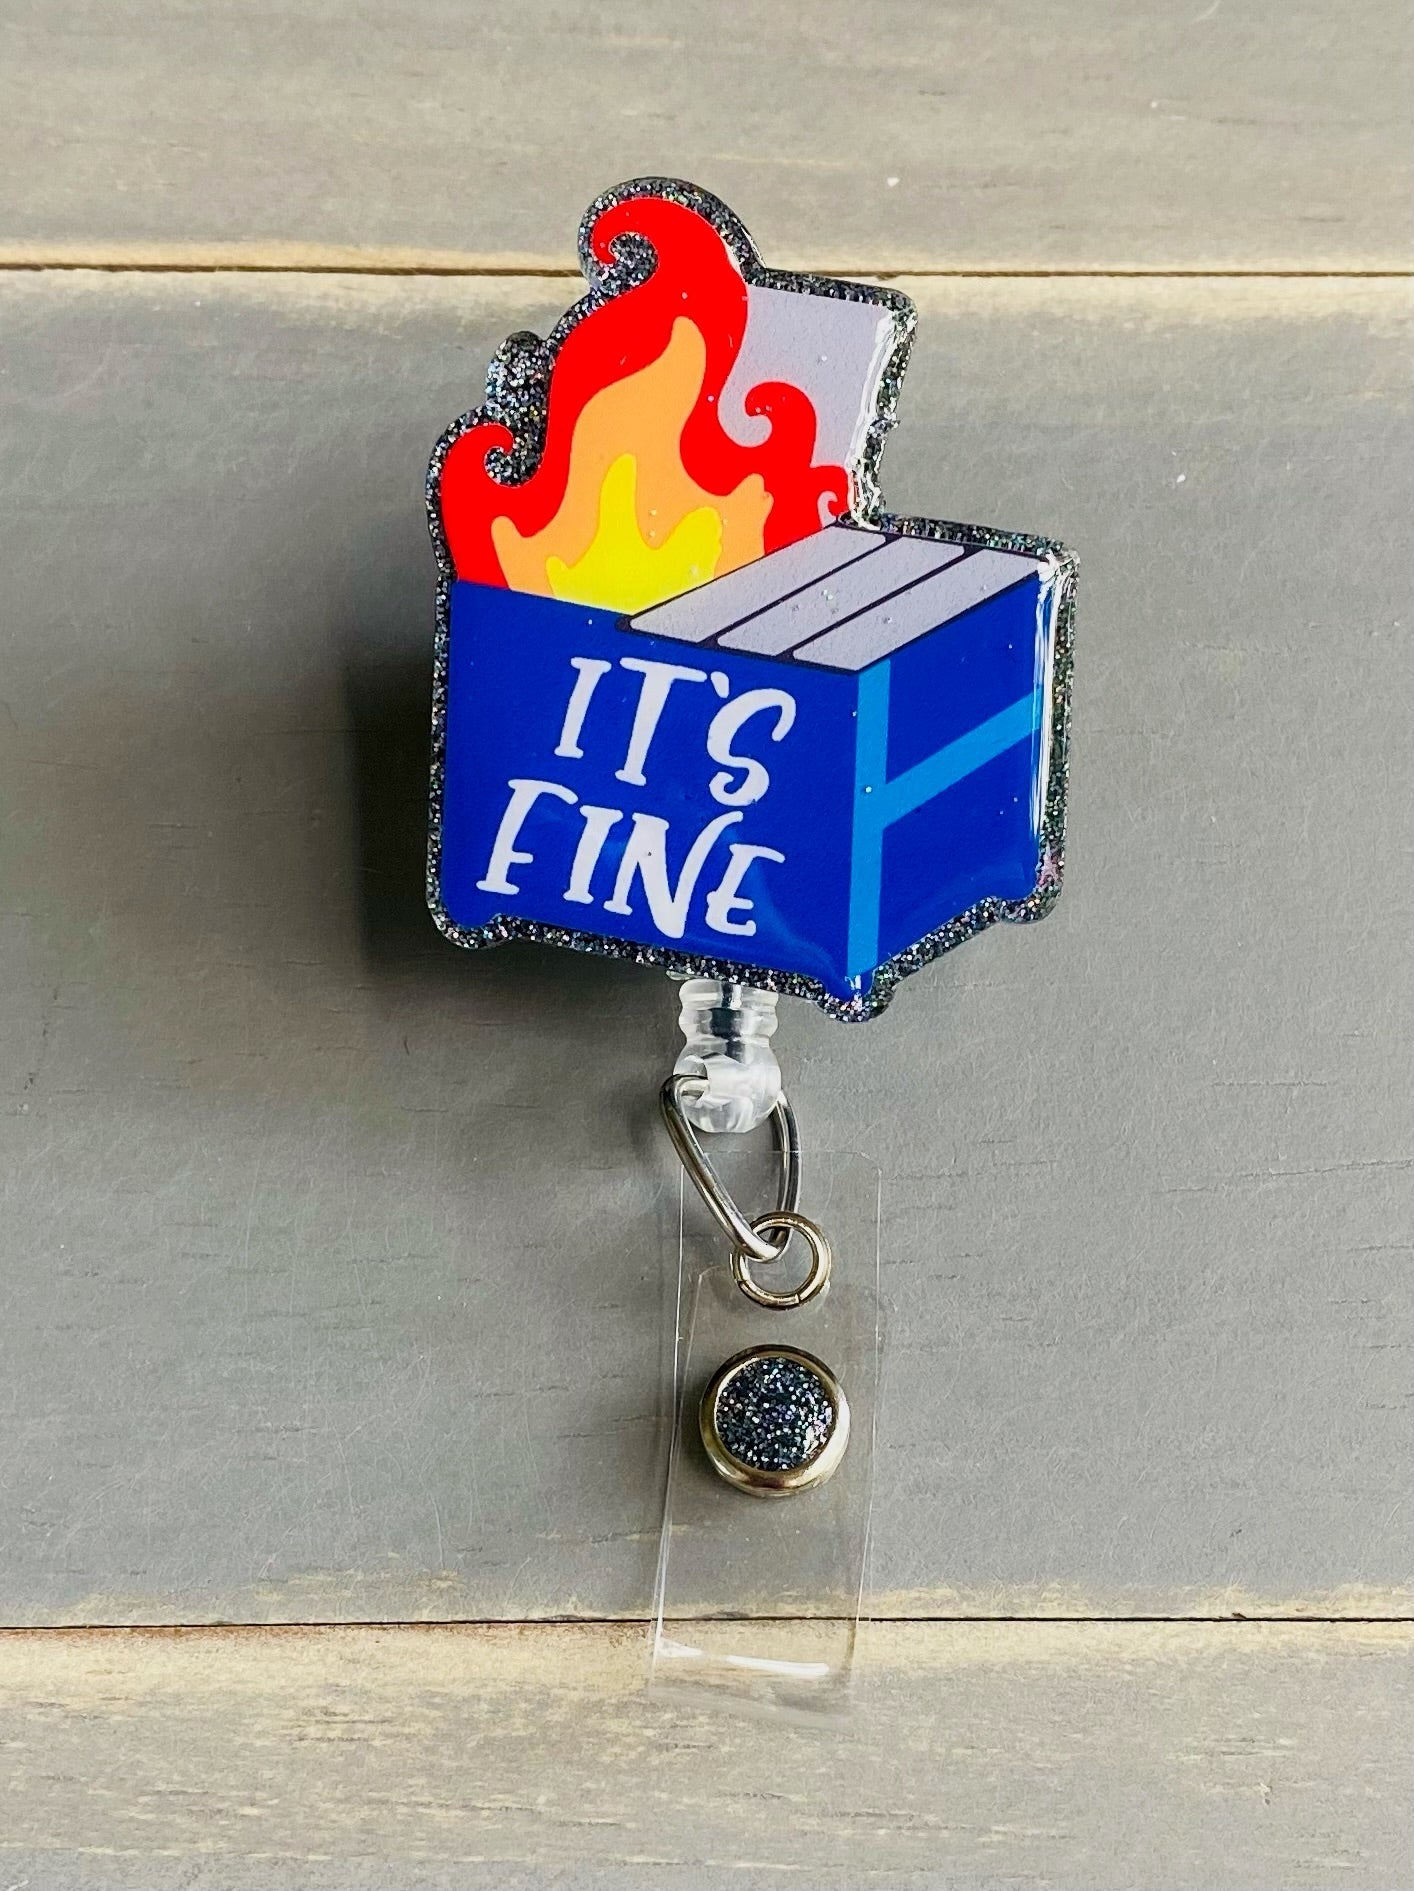 Blue Dumpster on Fire Badge Reel